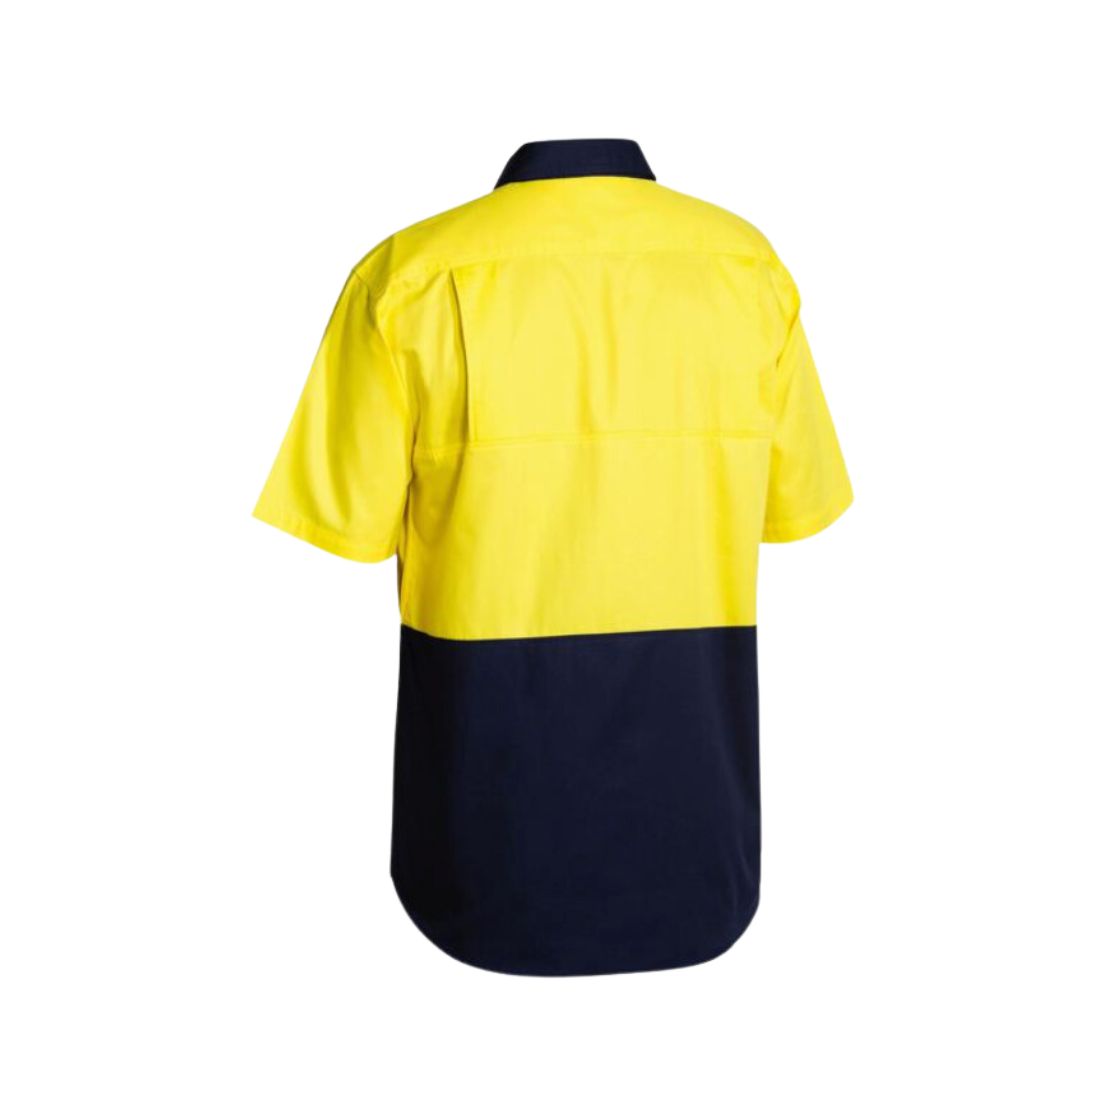 Hi-Vis Lightweight Shirt - Short Sleeve Yelow/Navy Menswear Mature Stock Service by Bisley | The Bloke Shop